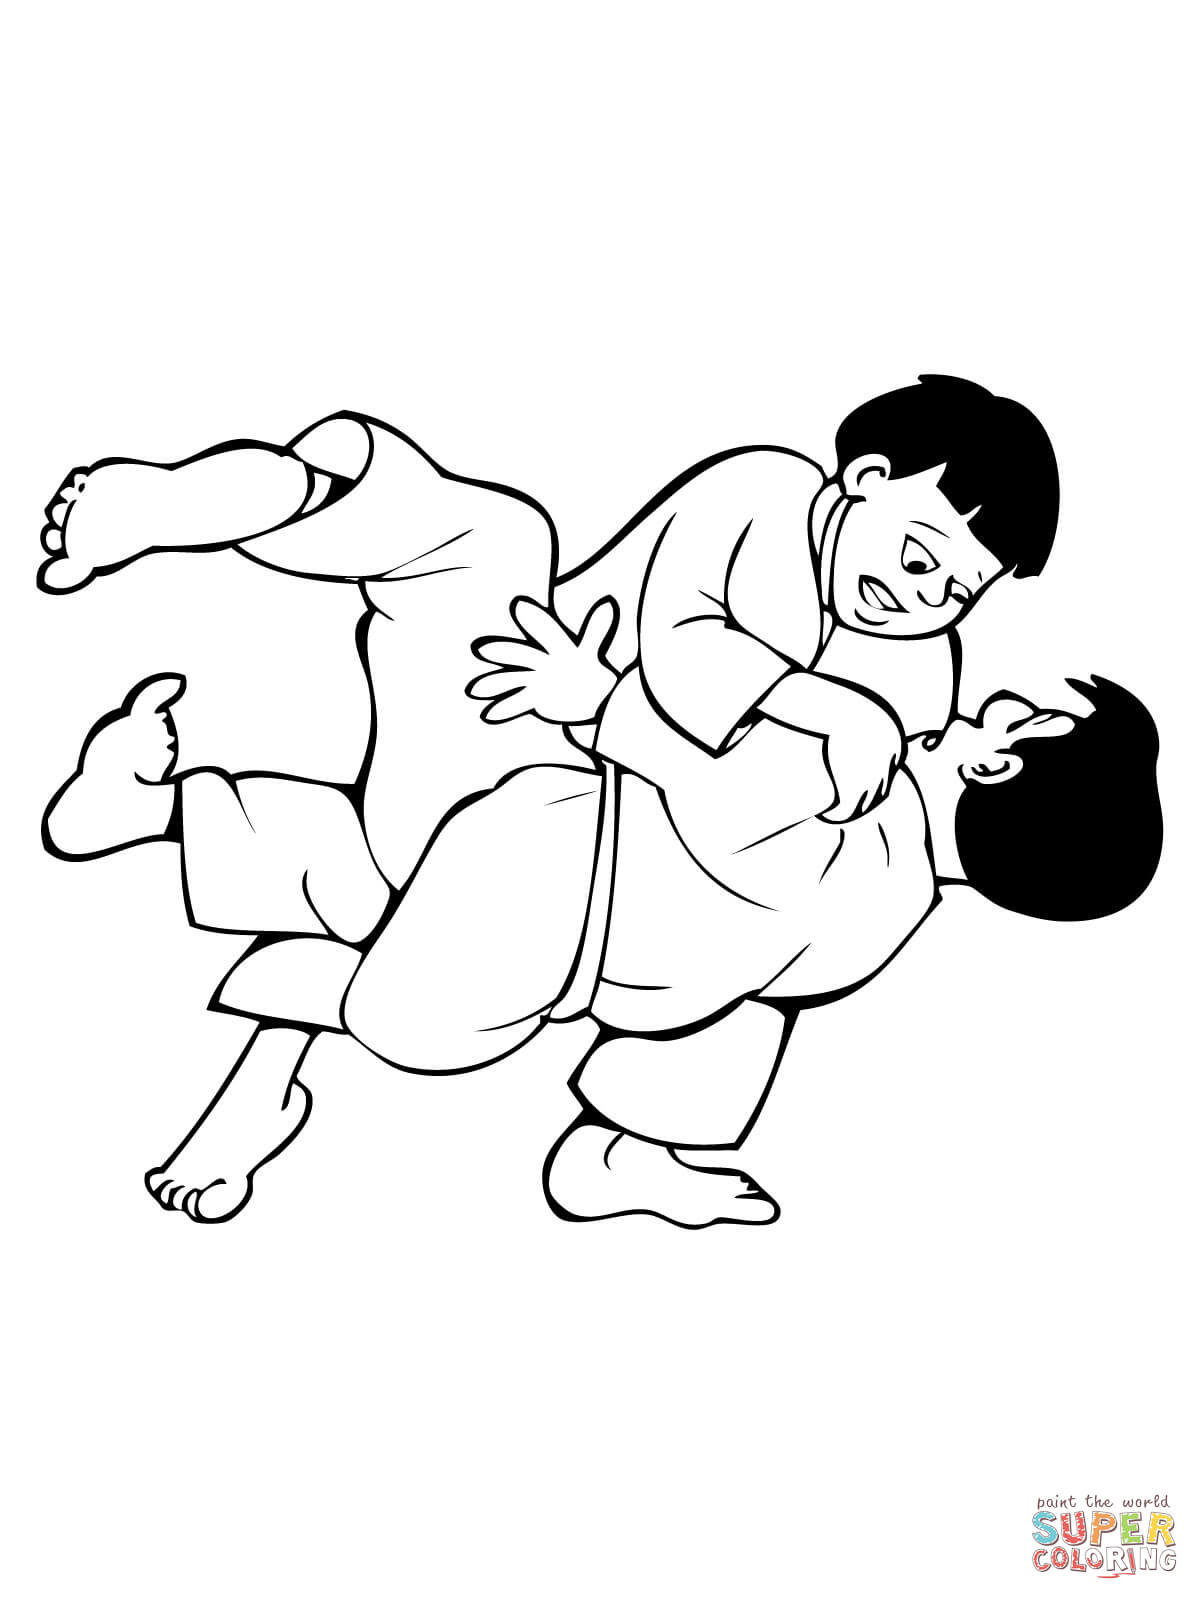 judo-coloring-page-0012-q1